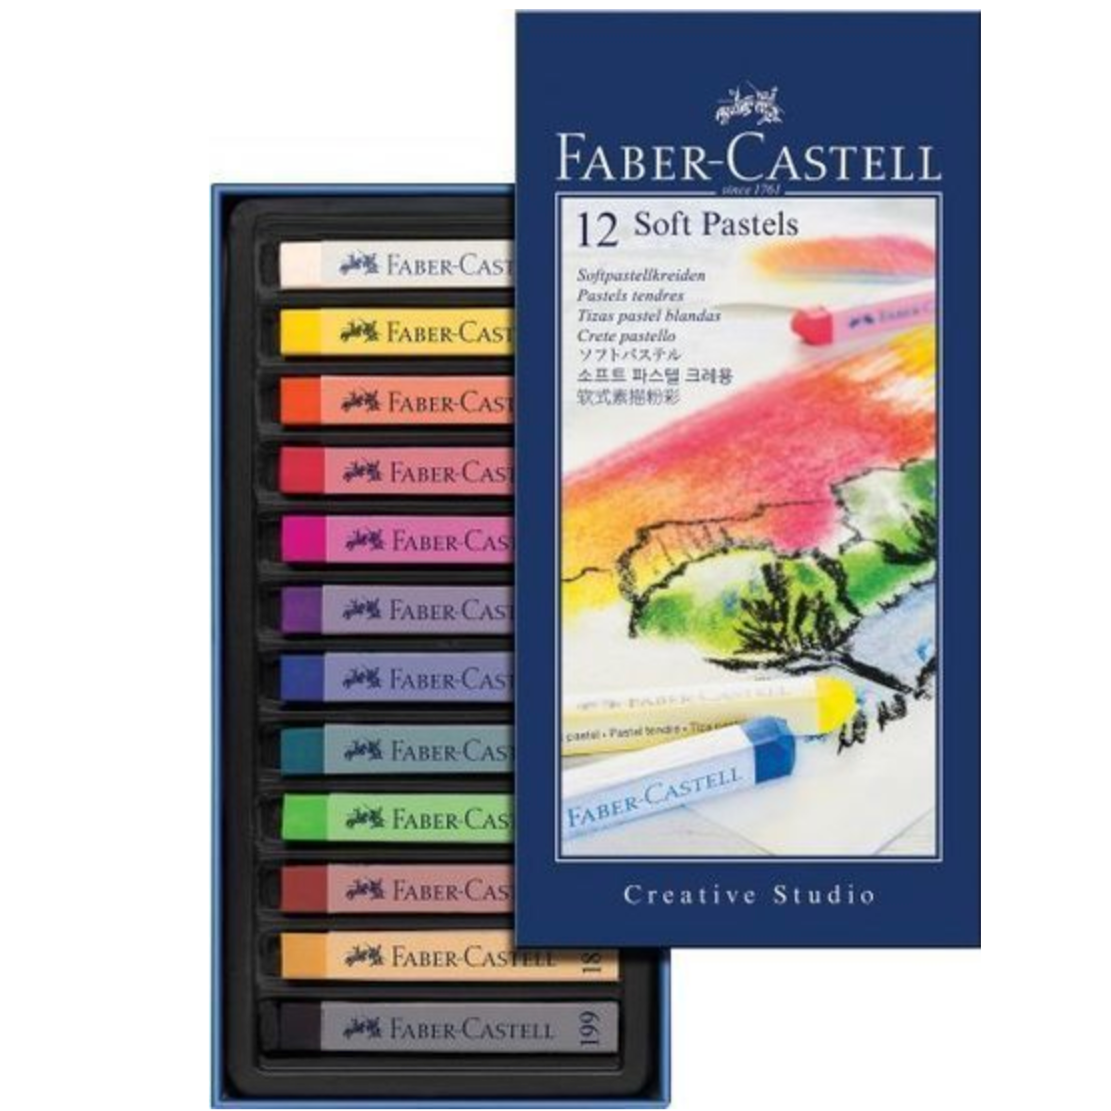 Faber-Castell Creative Studio Full Stick Soft Pastels - 12 pack by Faber-Castell - K. A. Artist Shop